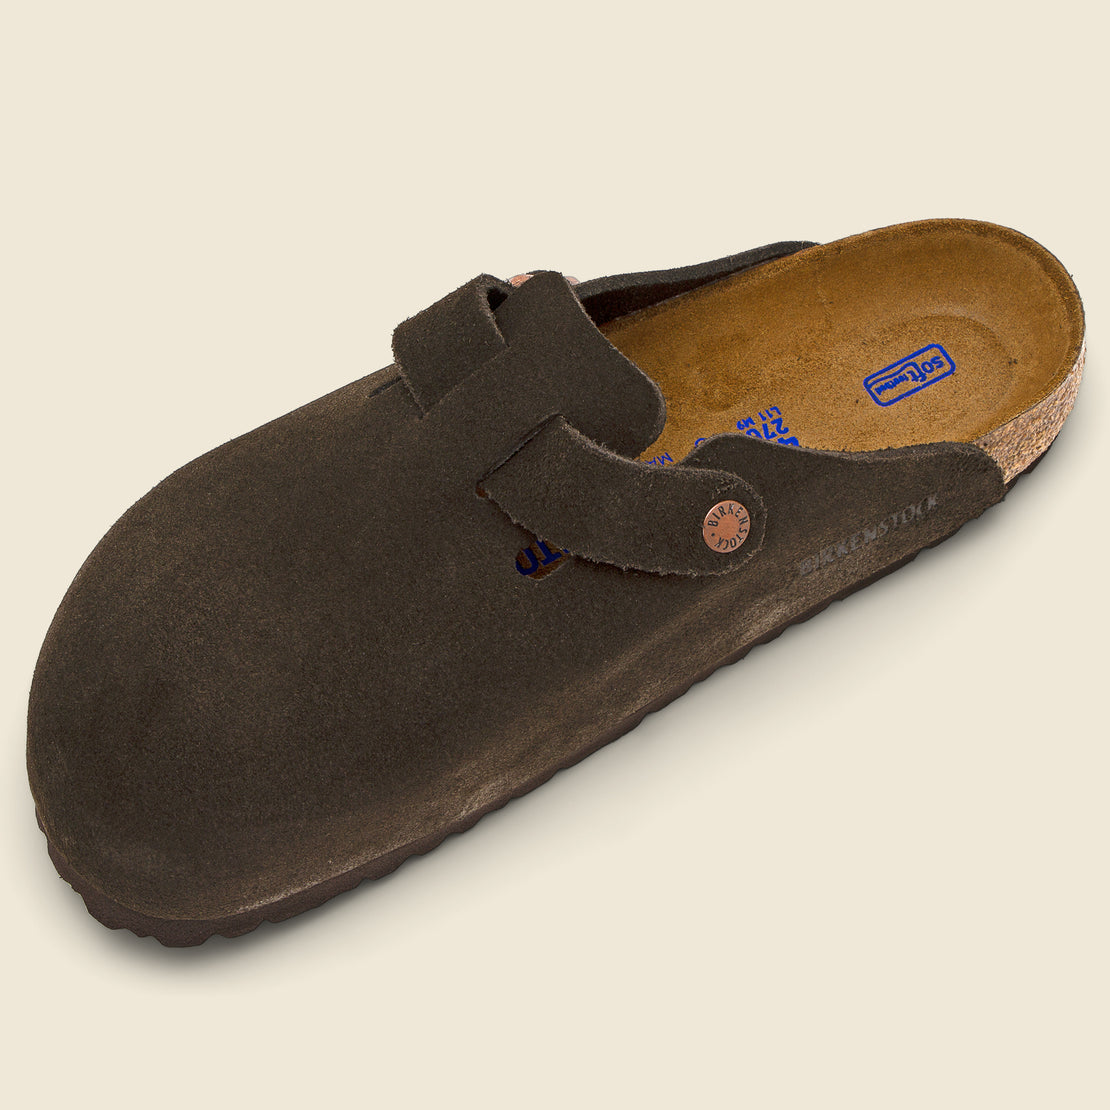 Boston Soft Footbed Clog - Mocha Suede - Birkenstock - STAG Provisions - Shoes - Sandals / Flops